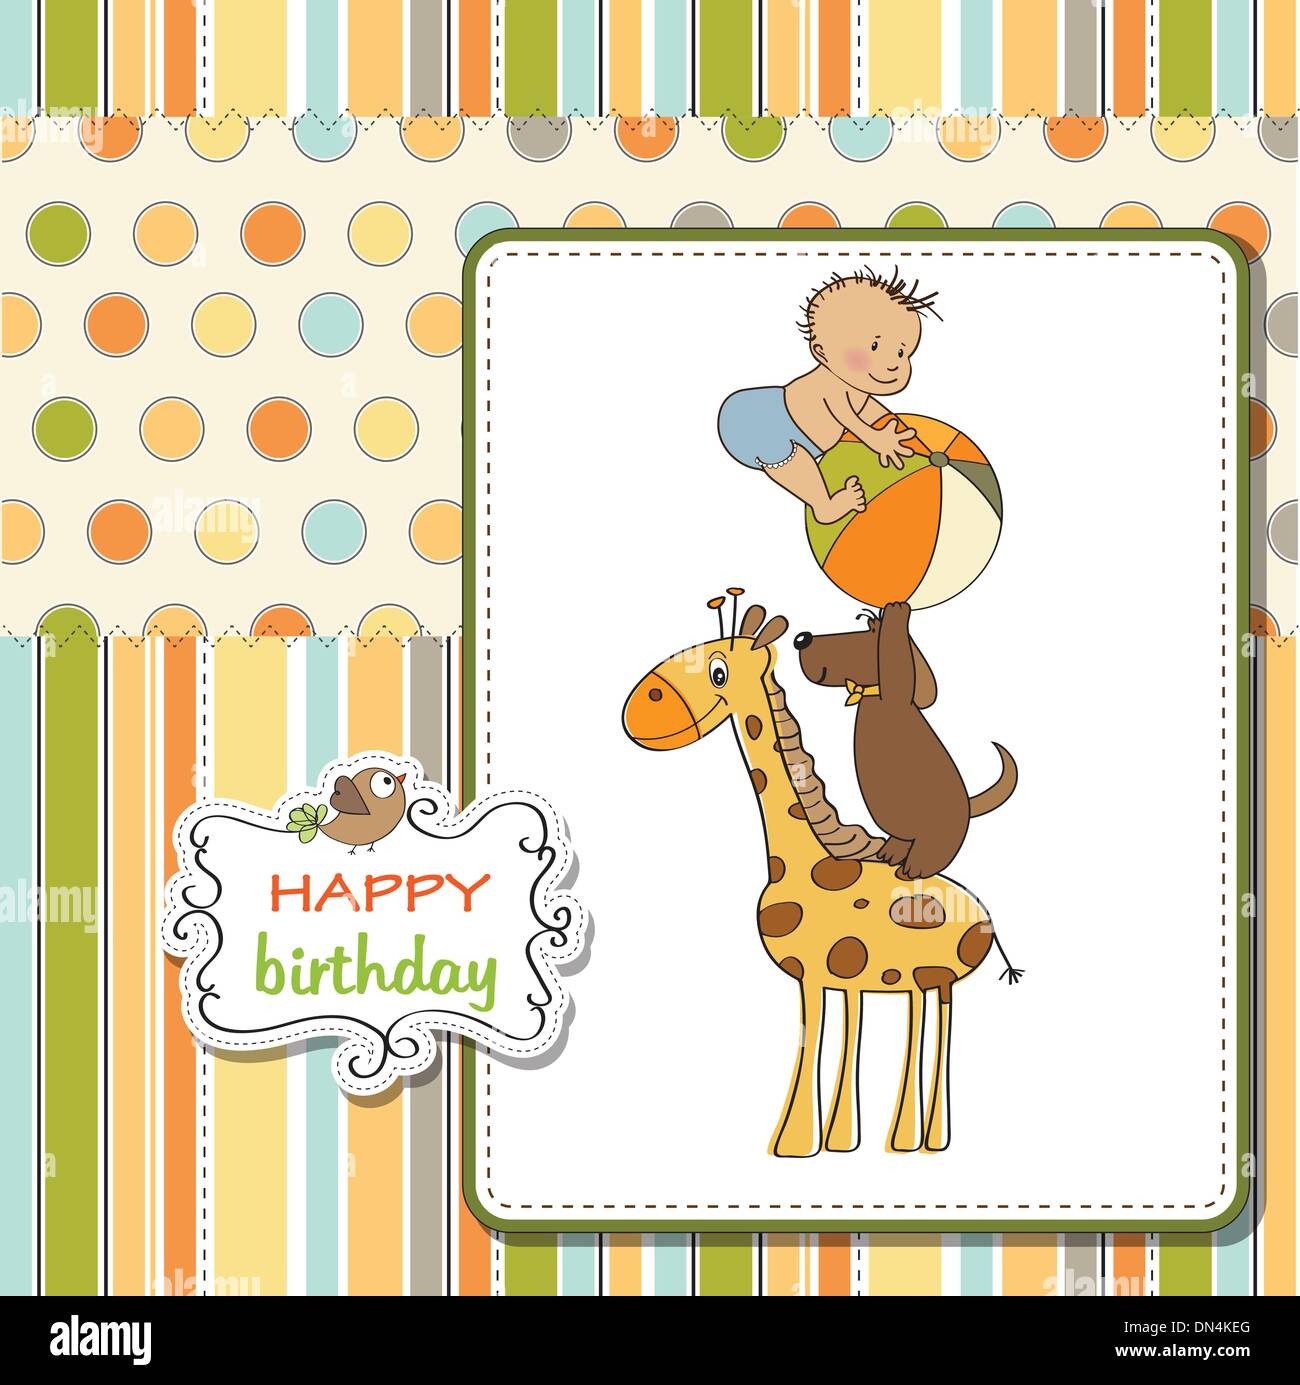 funny cartoon birthday greeting card Stock Vector